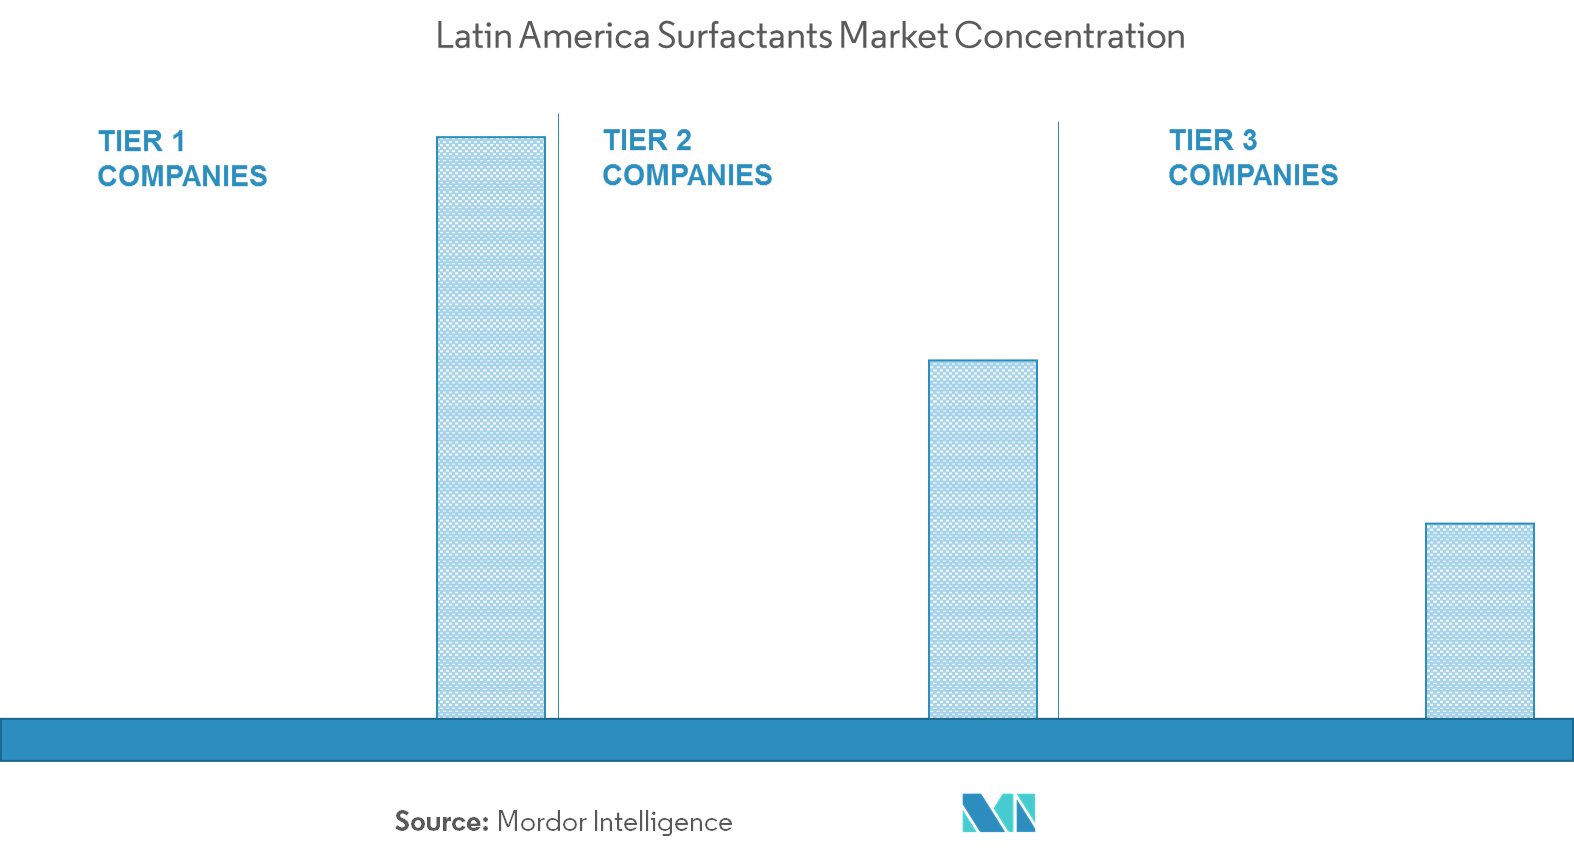 Latin America Surfactants Market - Market Concentration